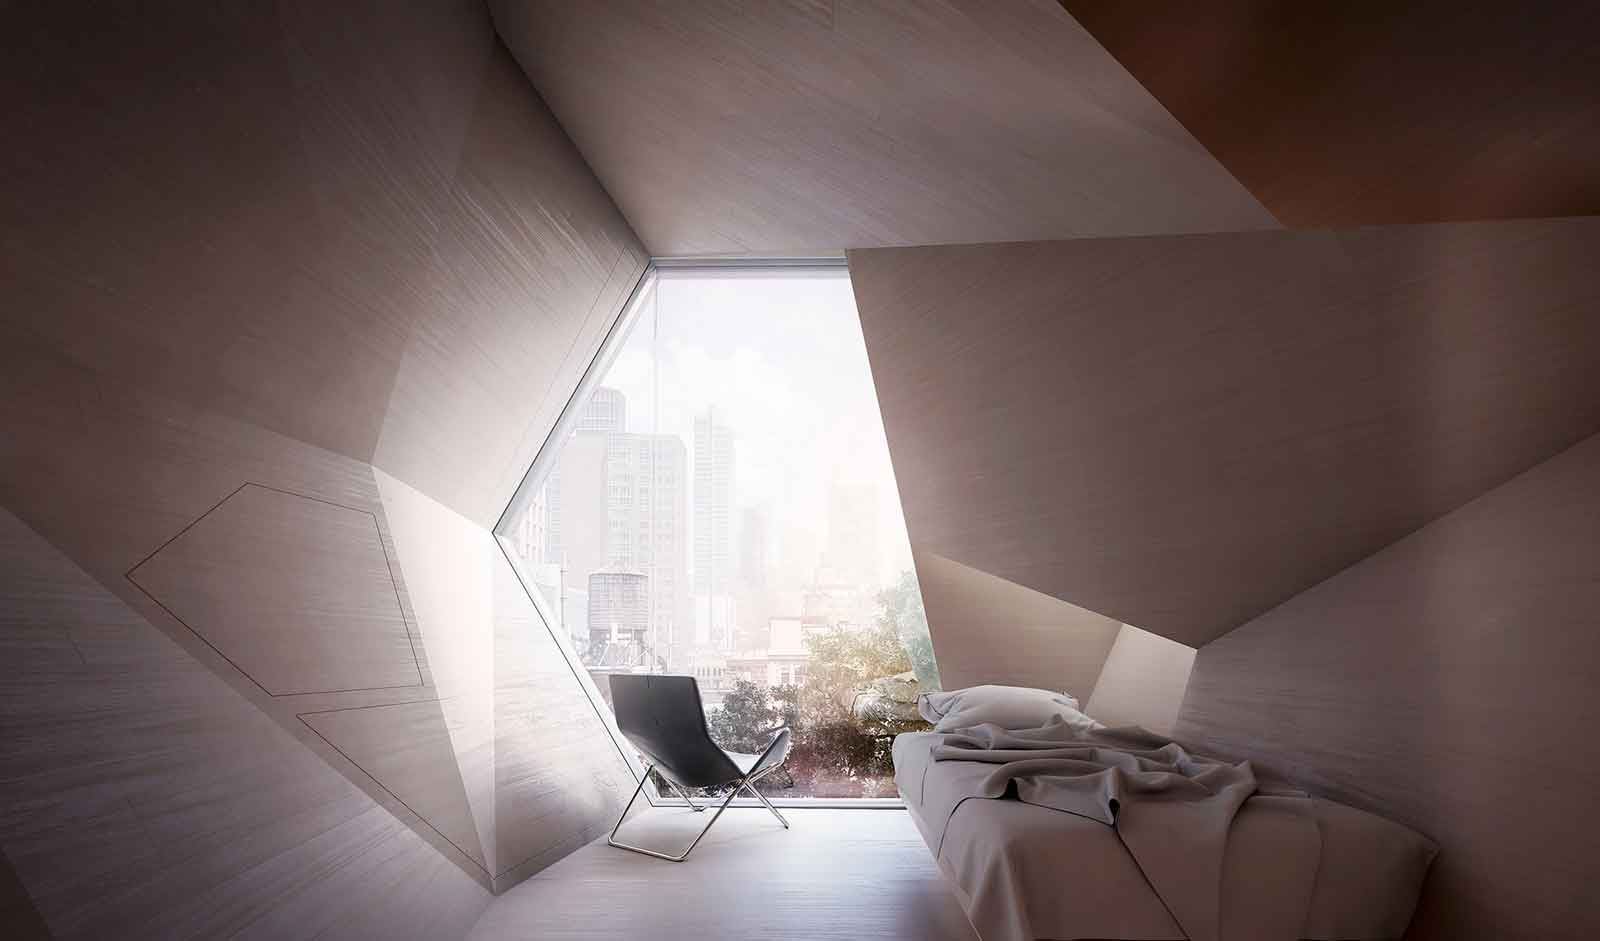 3D: interior Design. 3D Printed Architecture of a Minimalist Bedroom